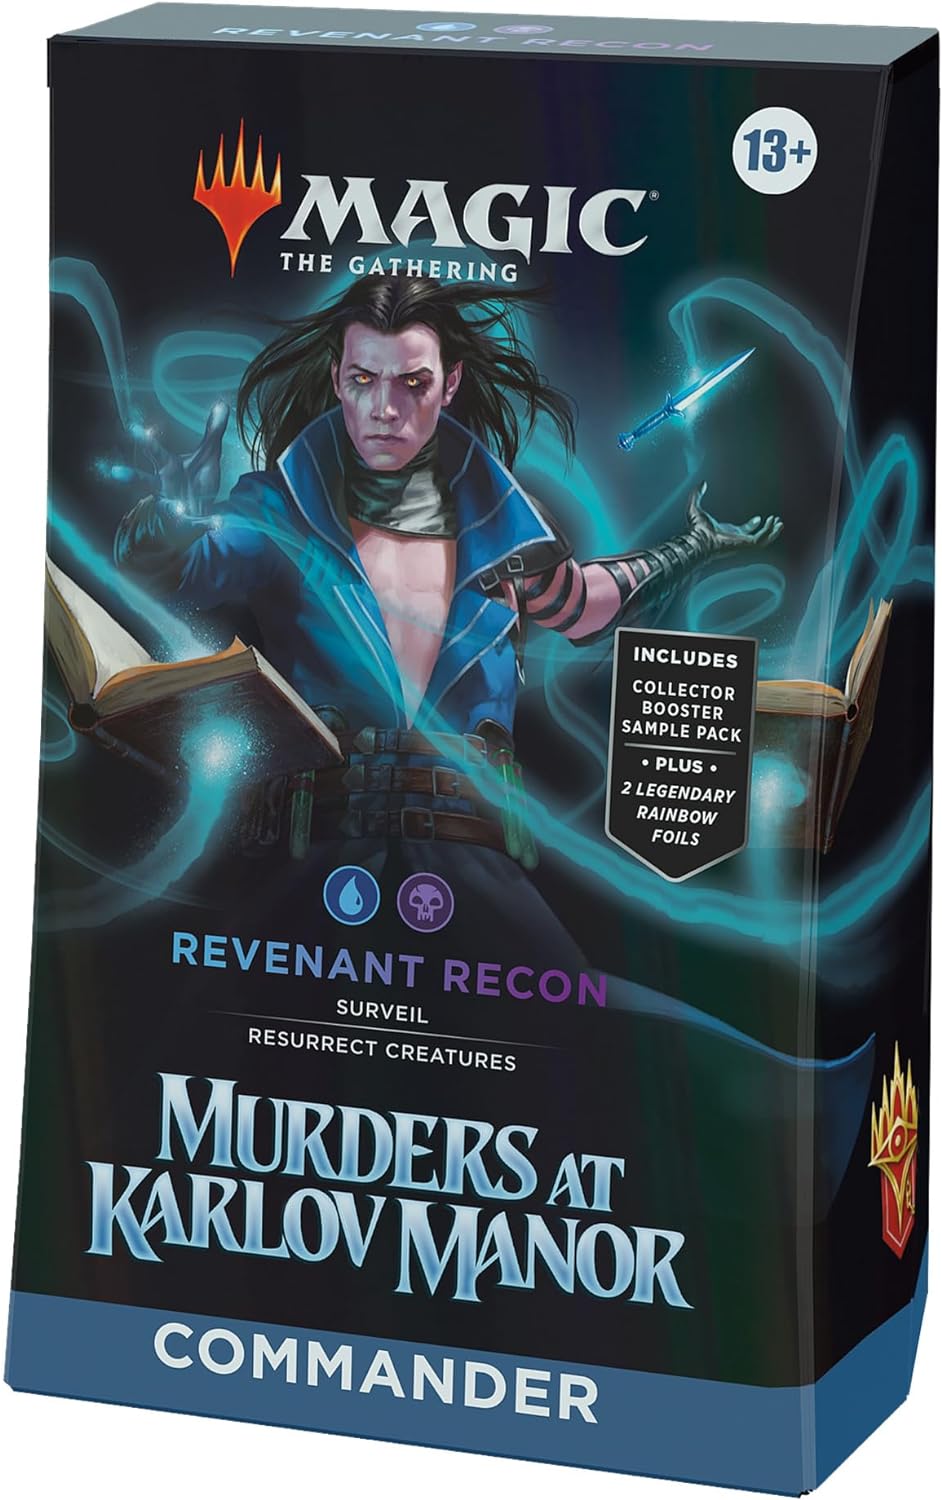 Magic: The Gathering Murders at Karlov Manor Commander Deck -Revenant Recon - gabescaveccc